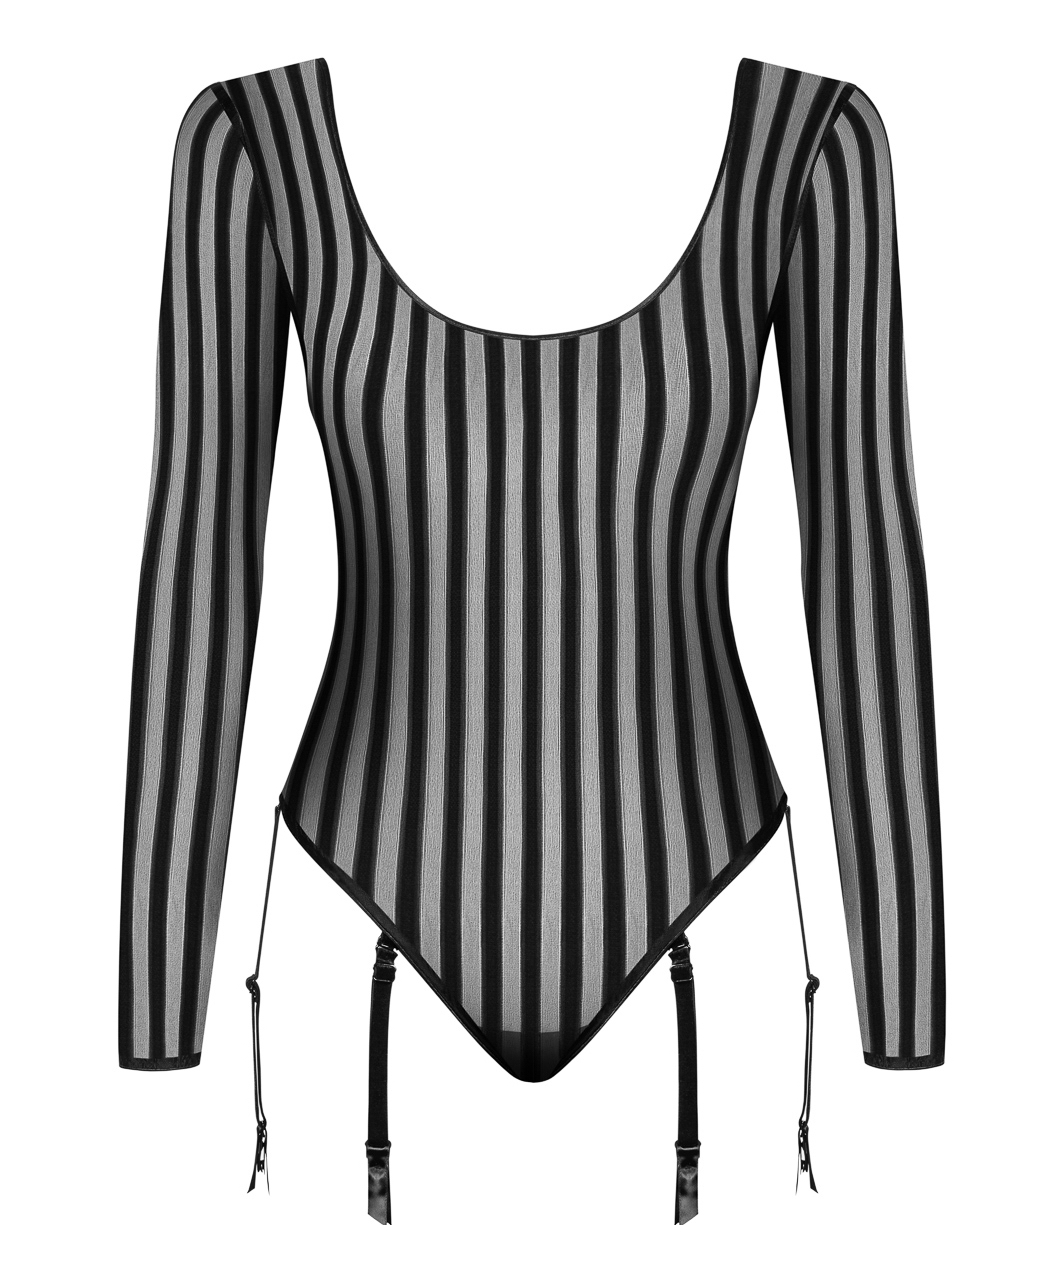 Noir Handmade black striped bodysuit with suspenders